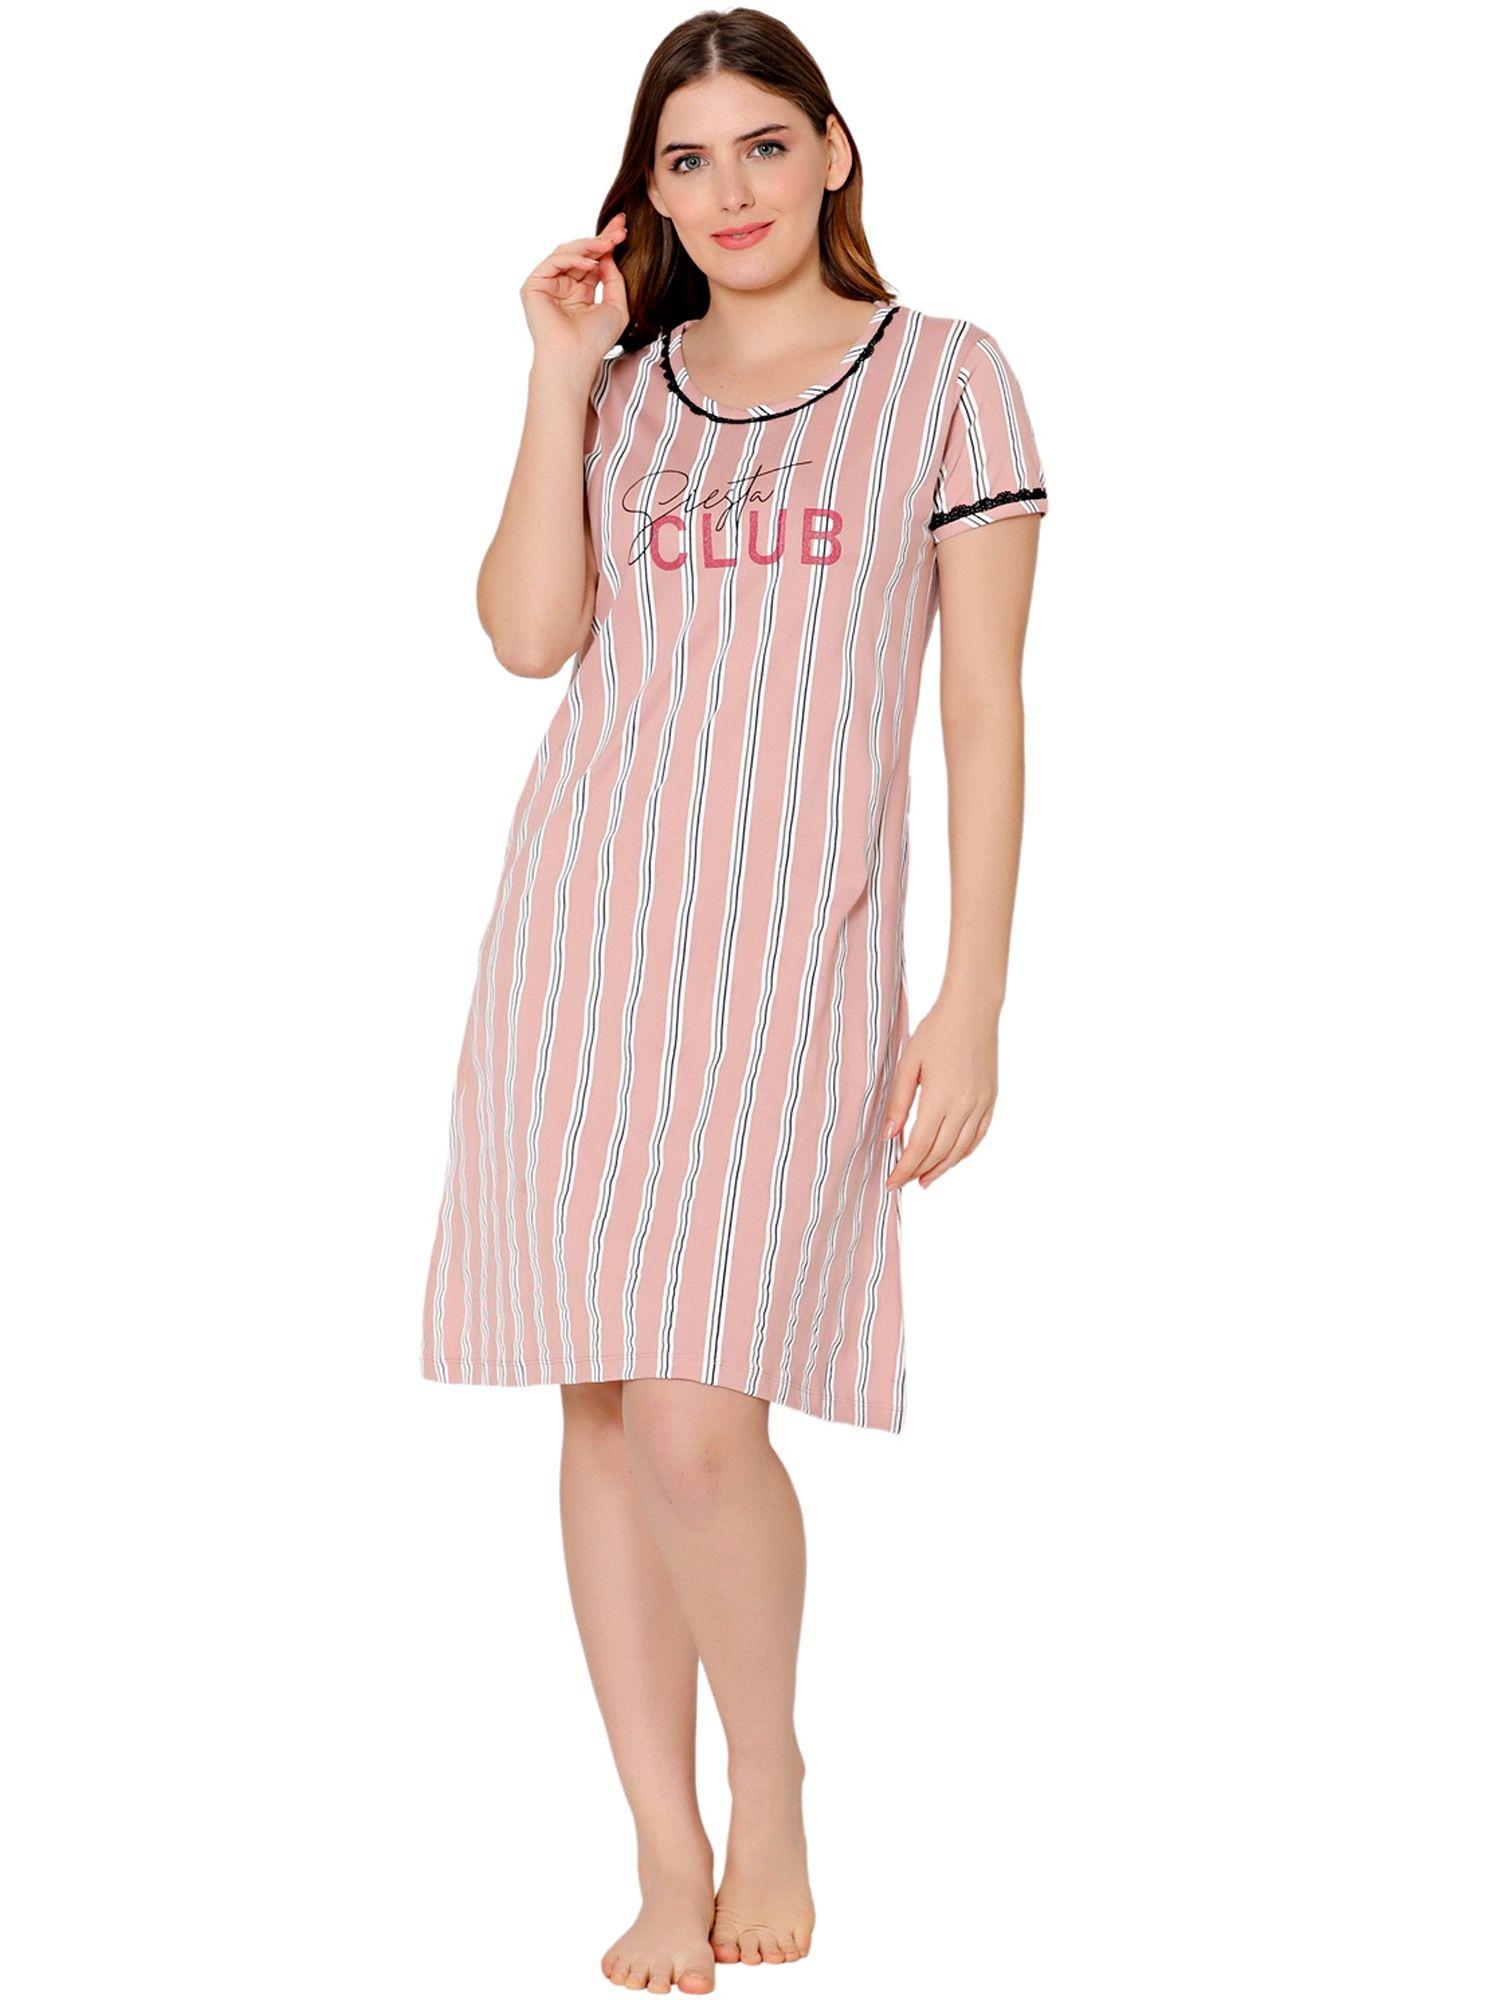 womens combed cotton round neck striped short night dress -bsn9013 pink